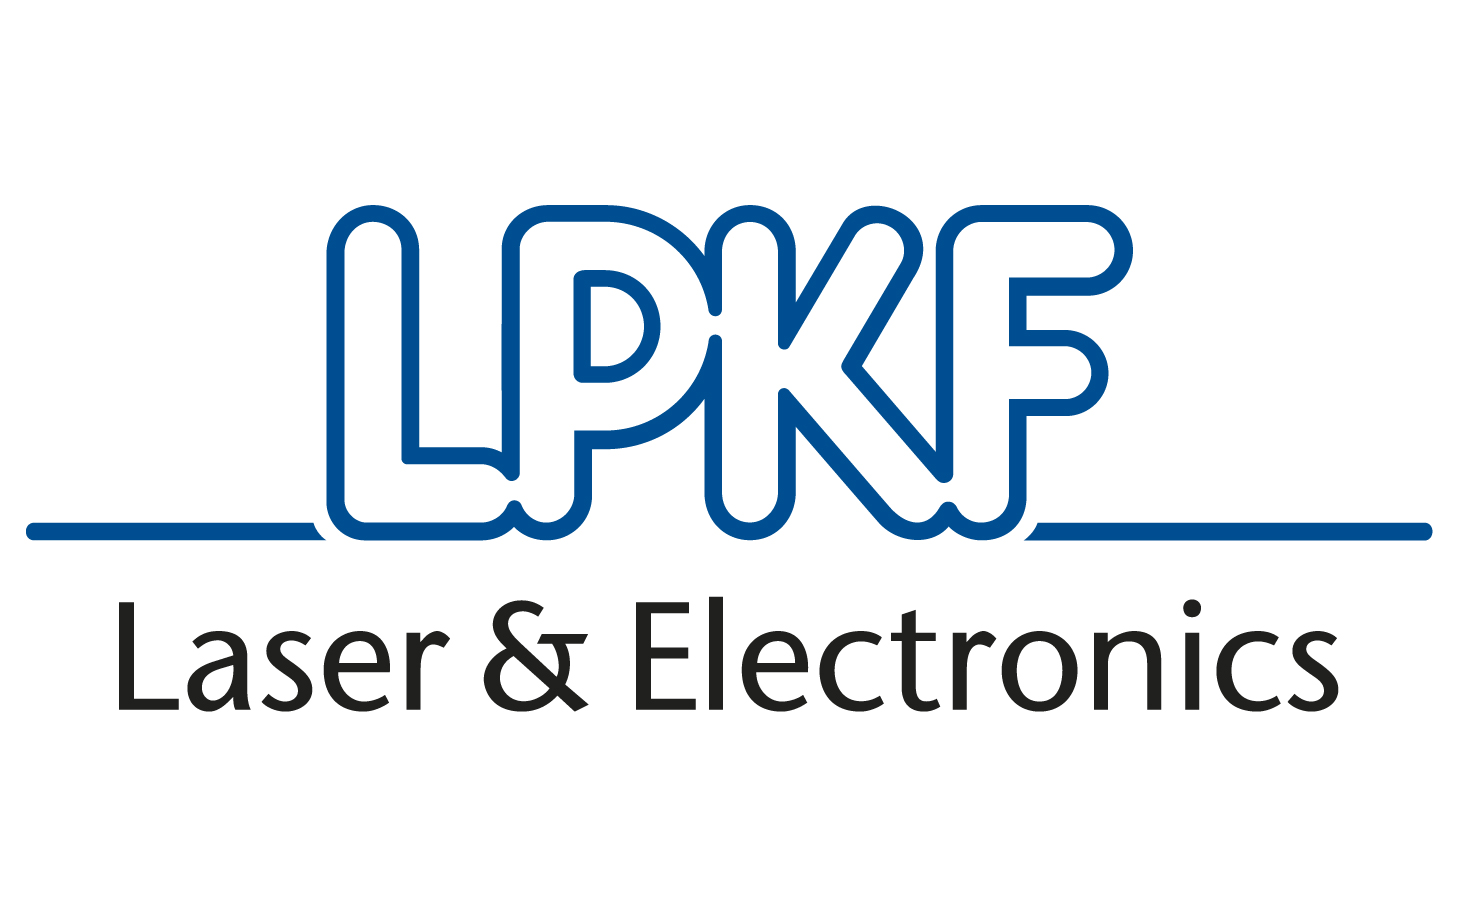 LPKF Laser & Electronics 株式会社